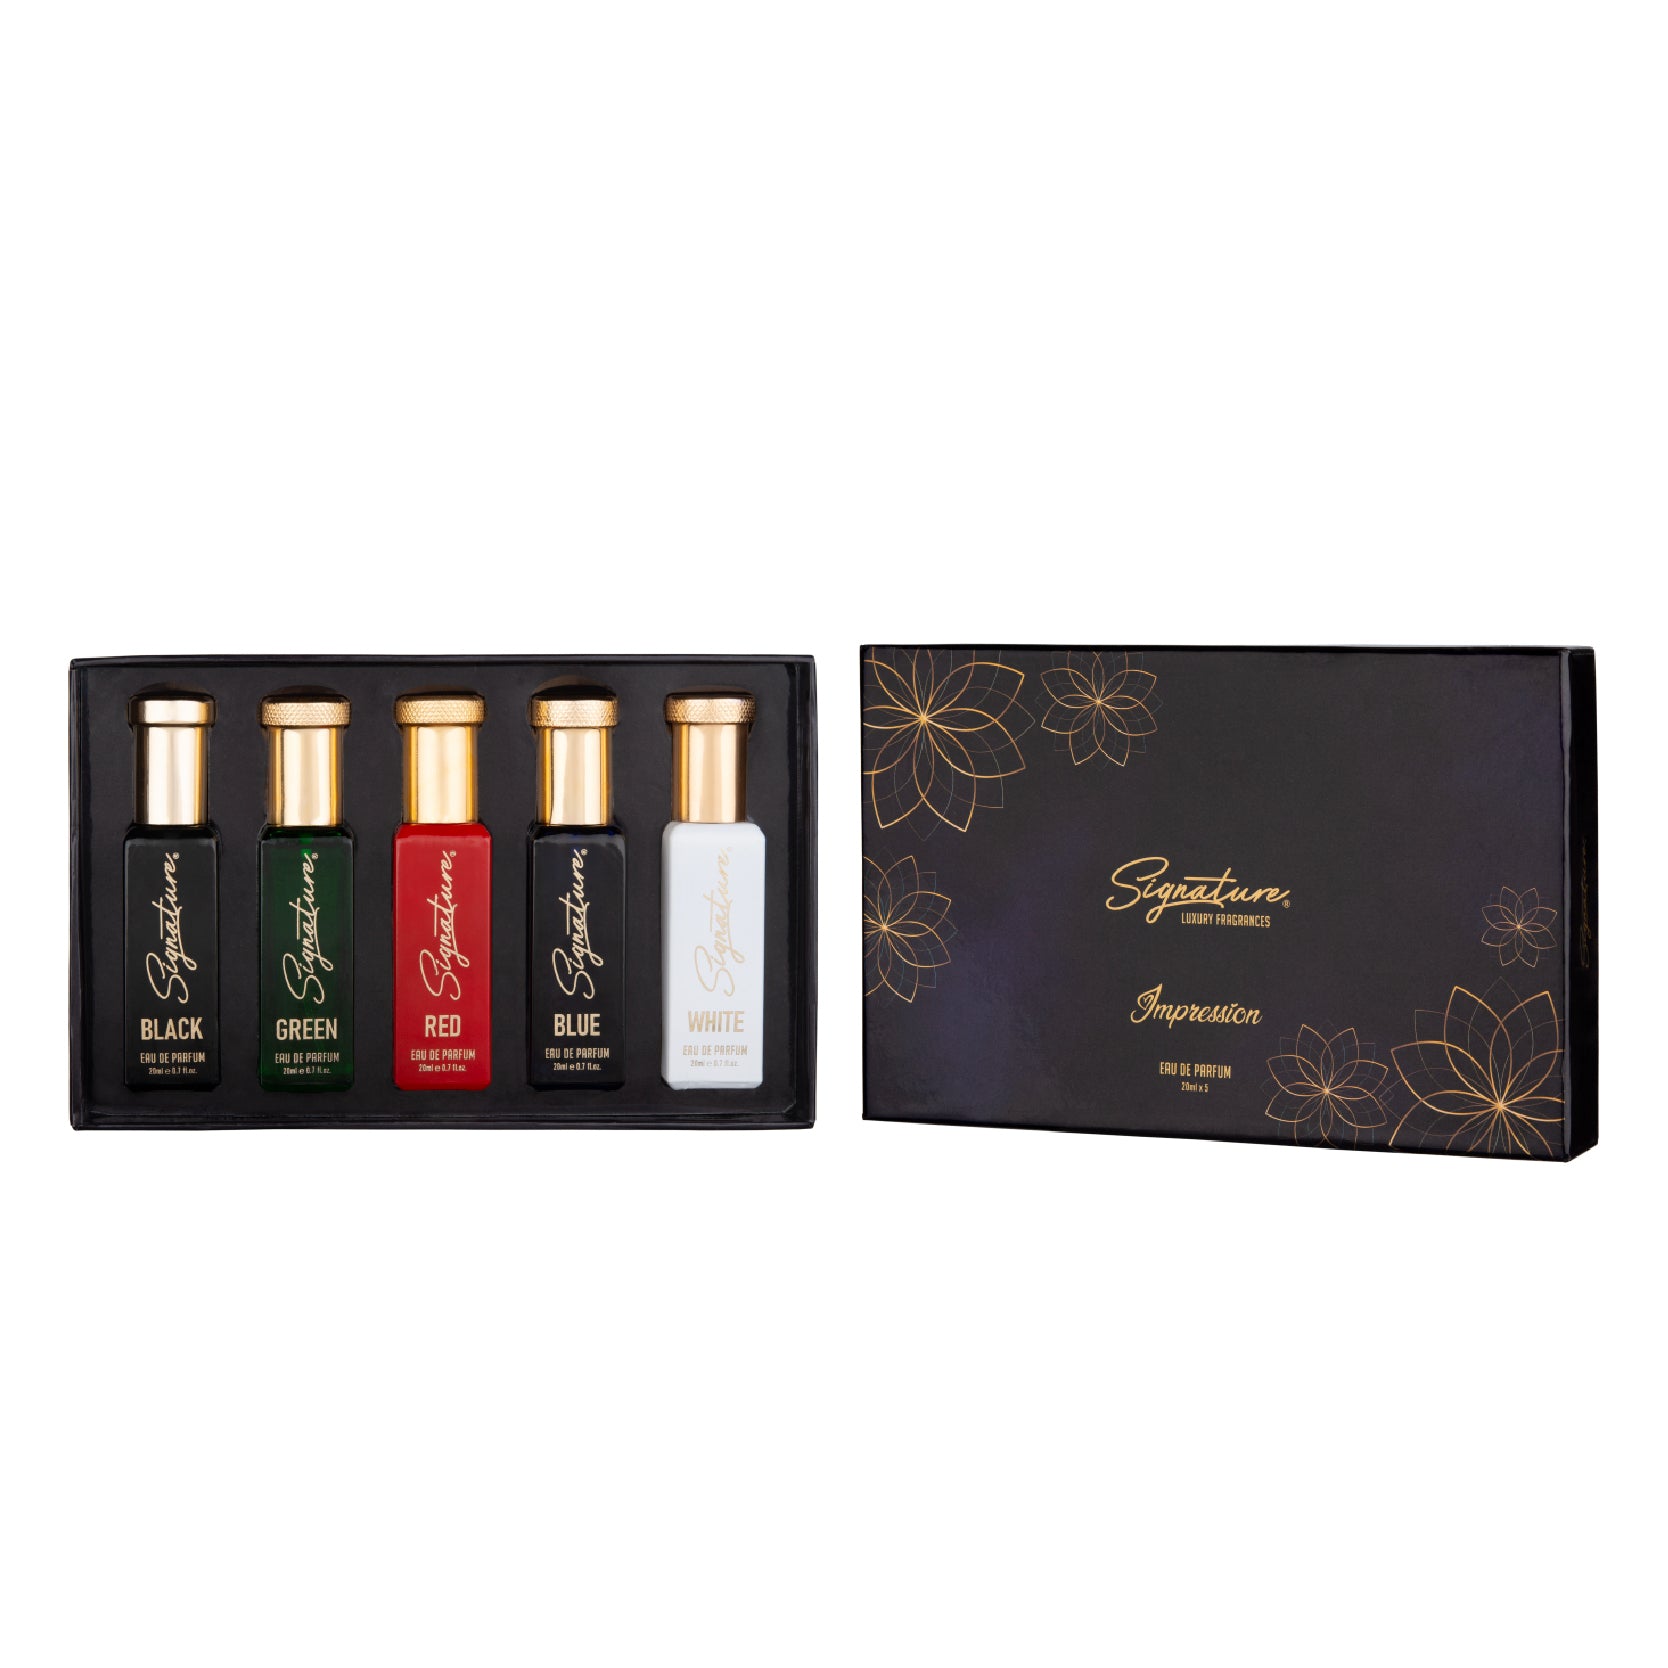 SIGNATURE Impression Eau de Parfum Gift Set for Men & Women (5 x 20 ml) - Global Plugin